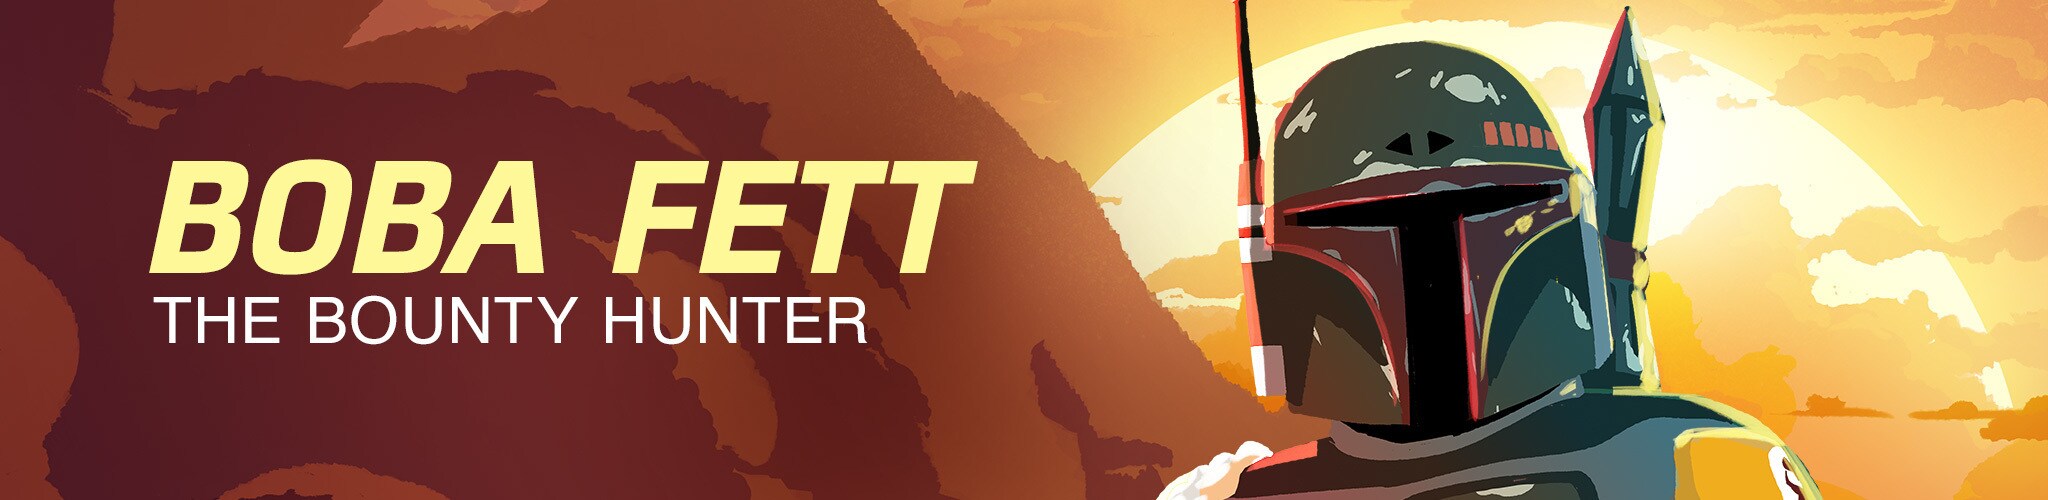 Boba Fett - The Bounty Hunter